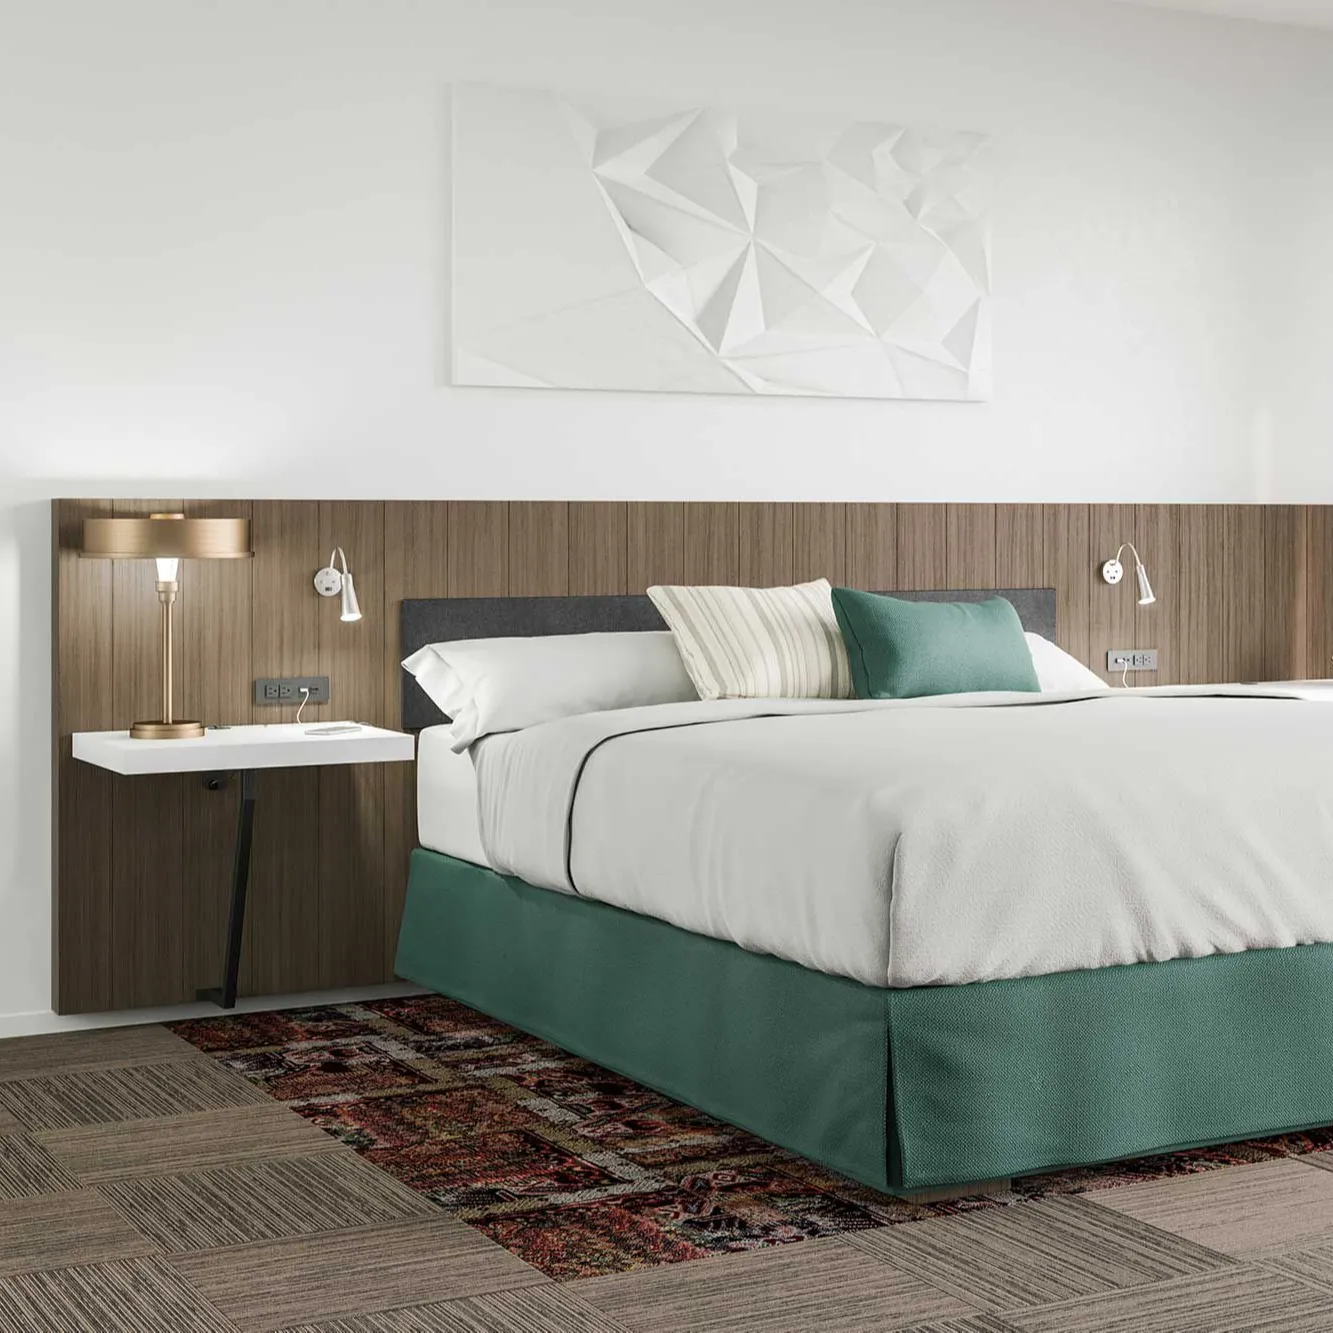 headboard with floating nightstand Hilton Garden Inn Flourish 2.0 Bloom Revive king guestroom FF&E supplier